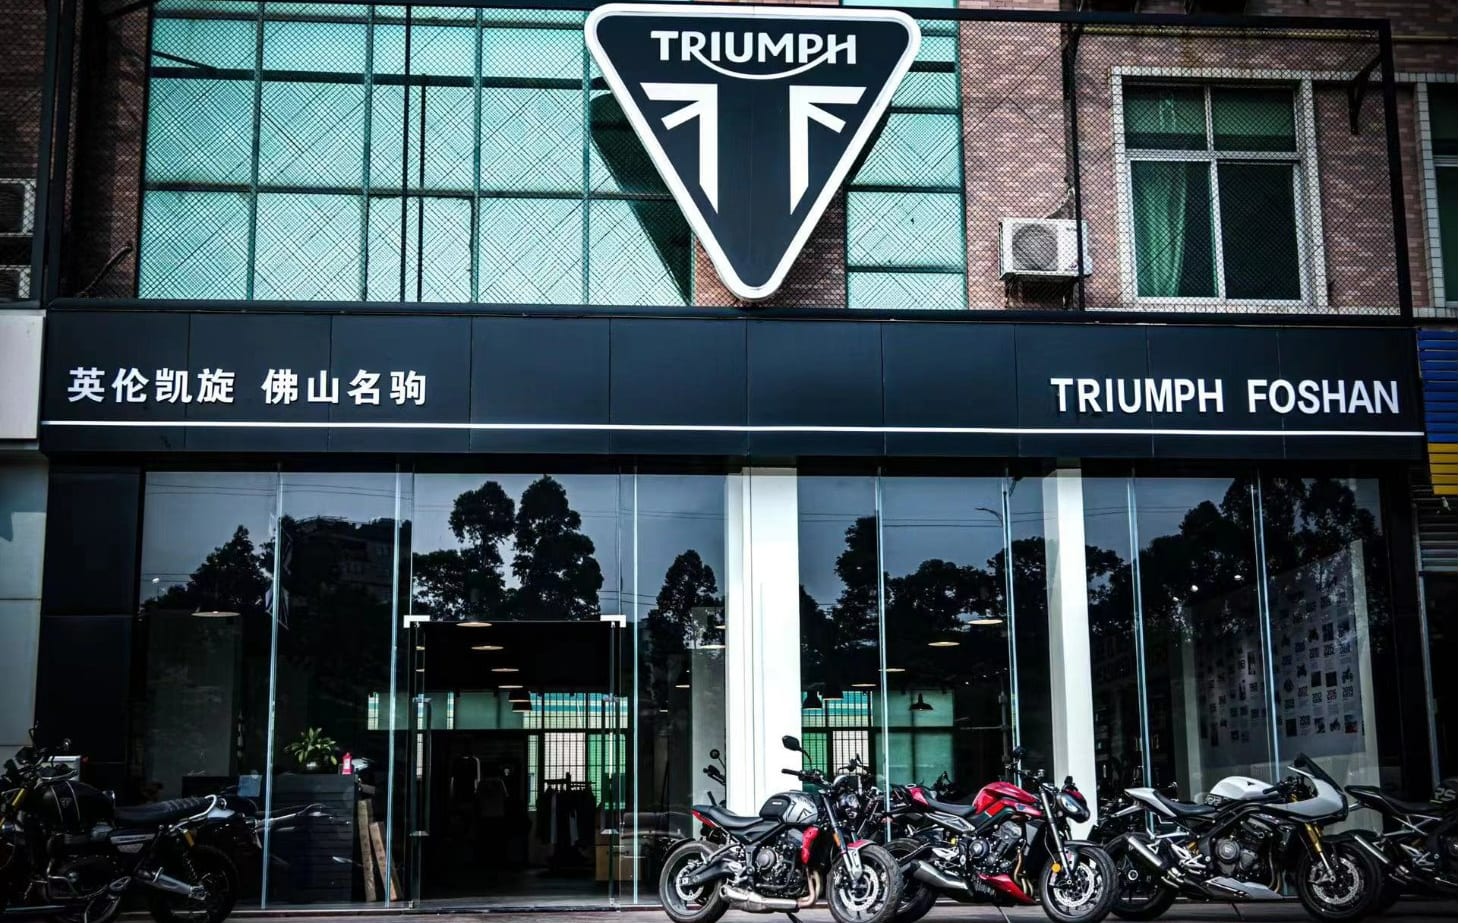 Triumph Foshan official triumph dealership